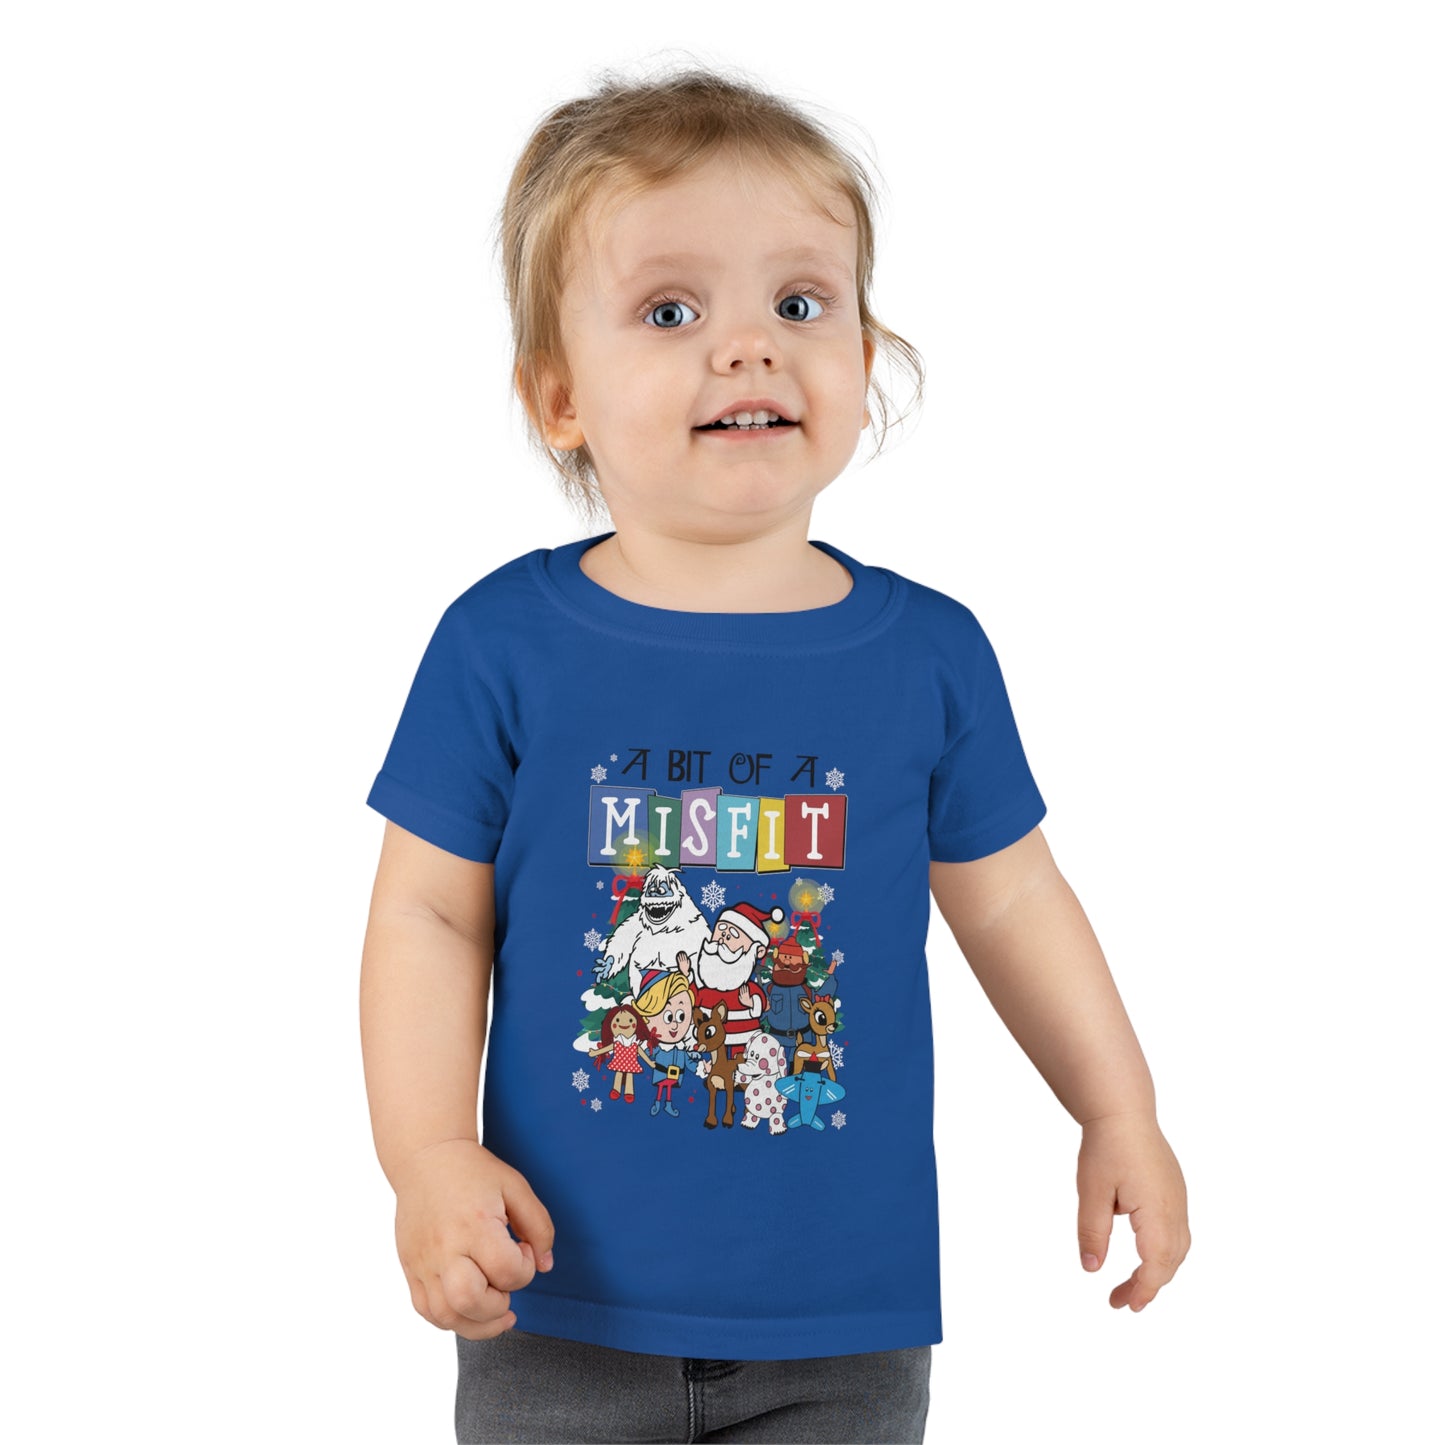 Misfit toy shirt, misfits toddler t-shirts, bumble shirt, toddler shirt, misfit island, Rudolph reindeer